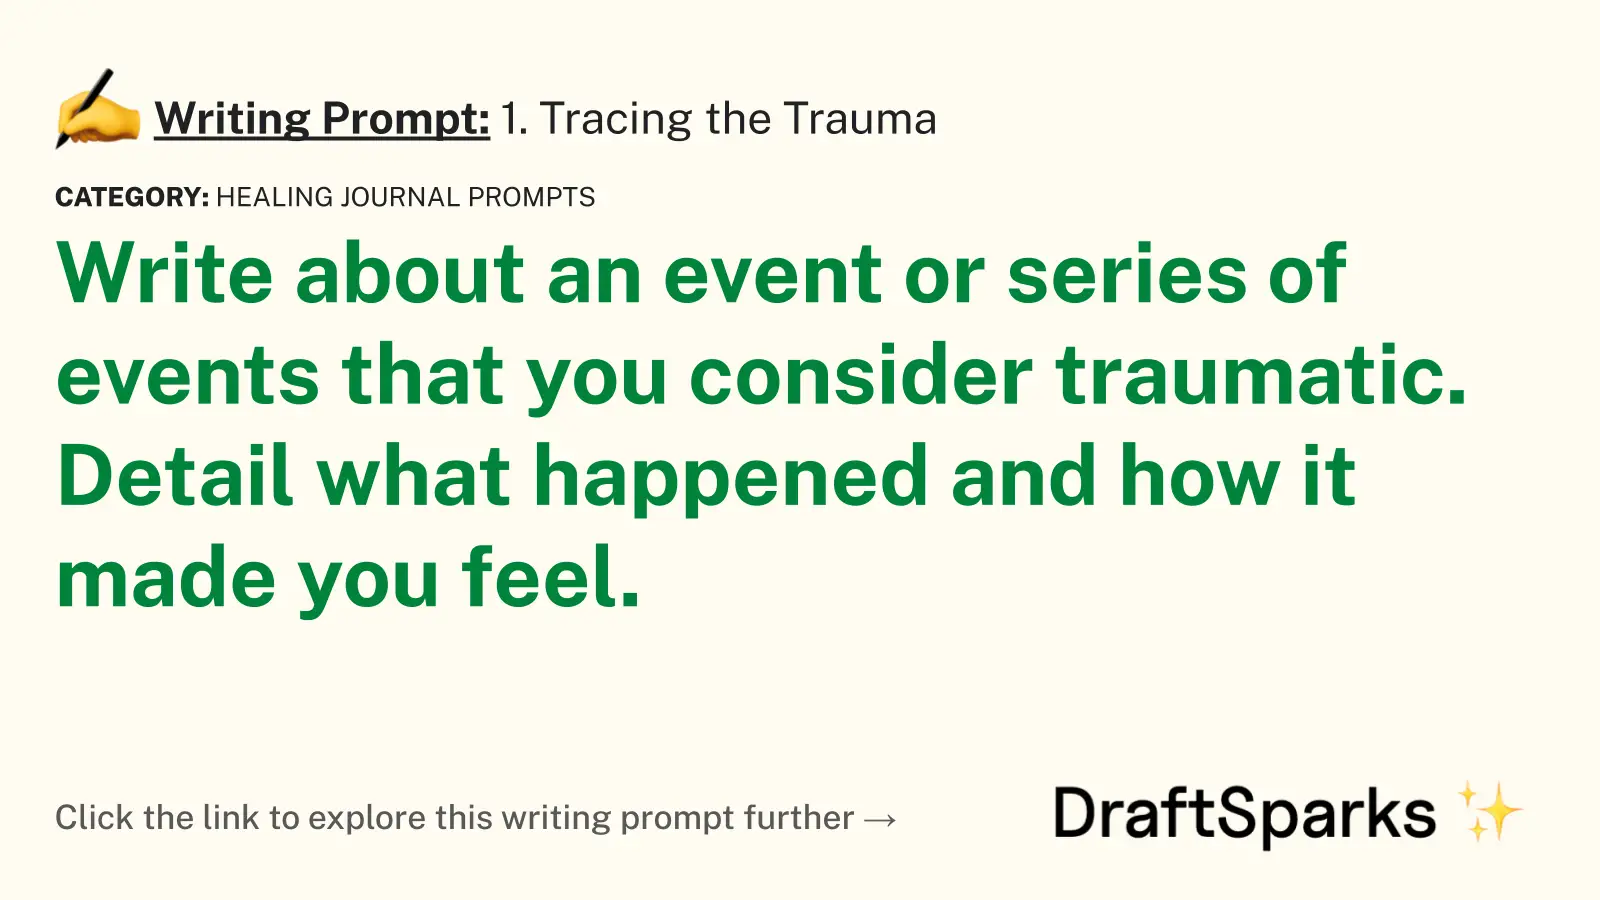 1. Tracing the Trauma